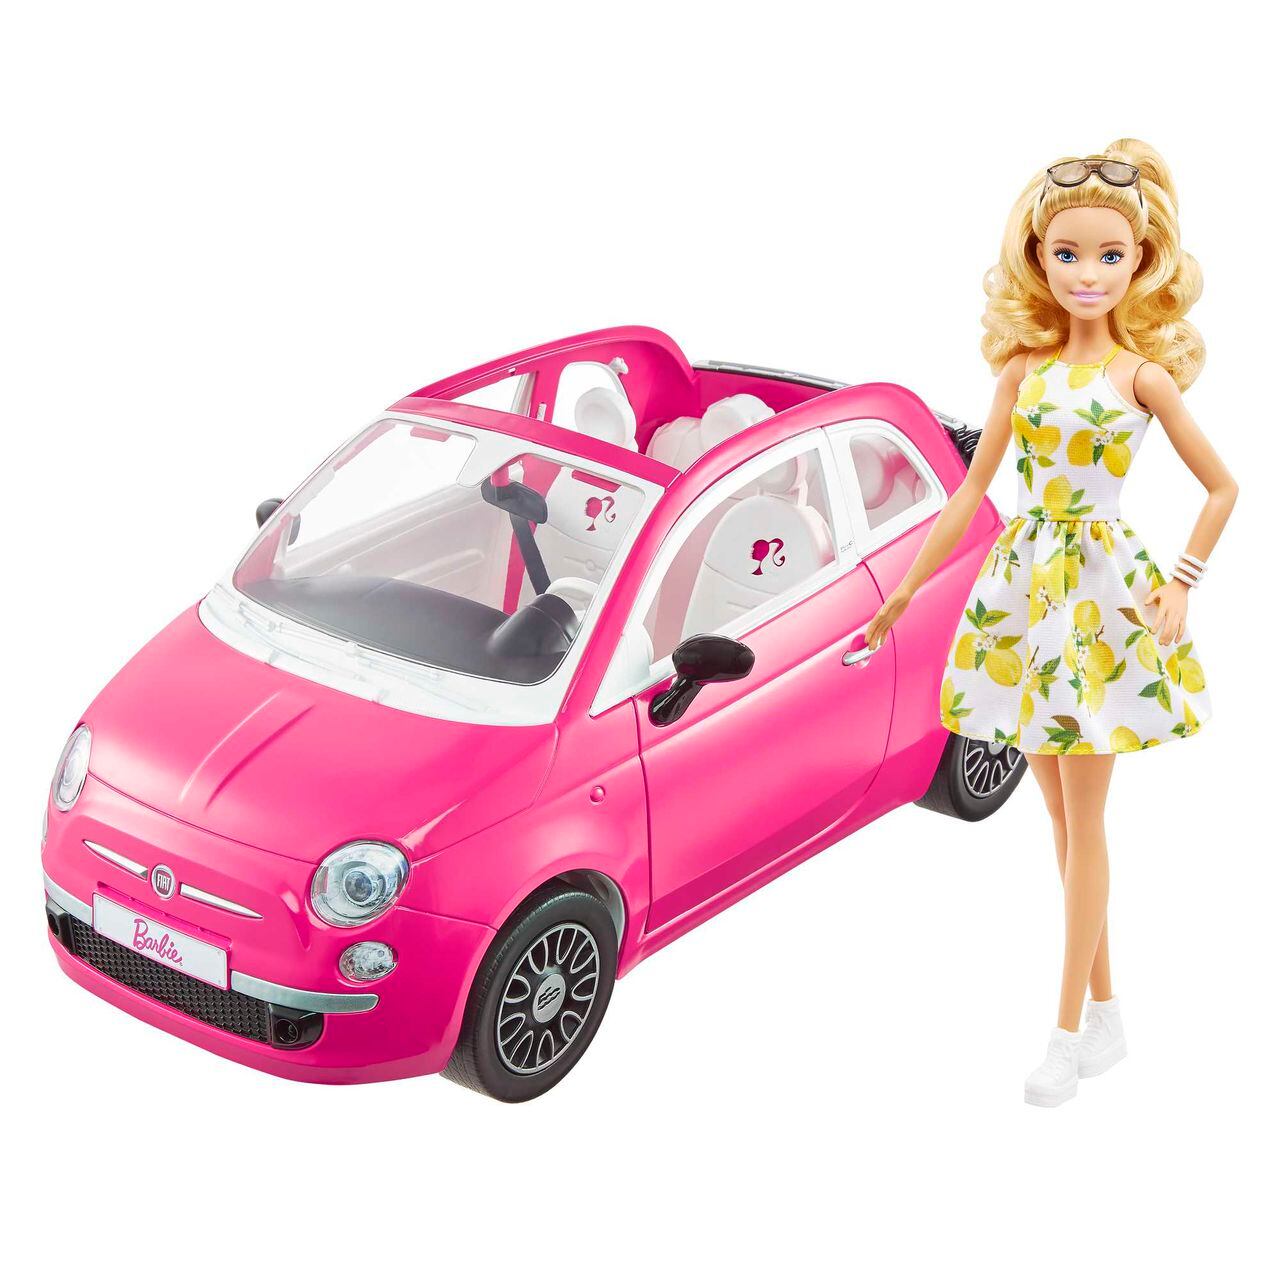 10 coches de Barbie que hemos tenido (o que querríamos tener) –  tumejoritv.com